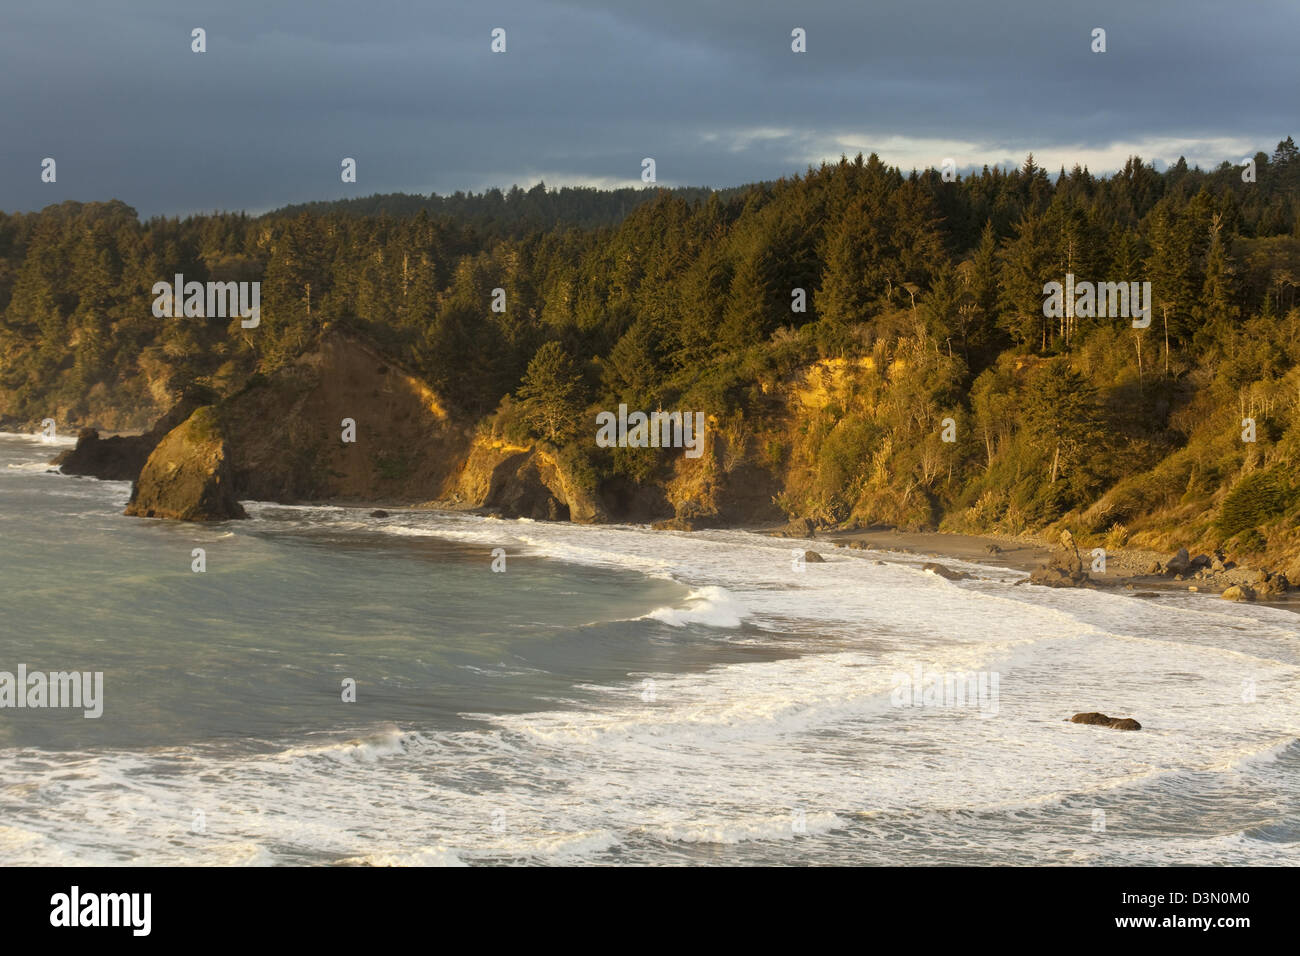 Ocean, Rock, Trees, Northern CA, Humboldt County, Trinidad CA Stock Photo